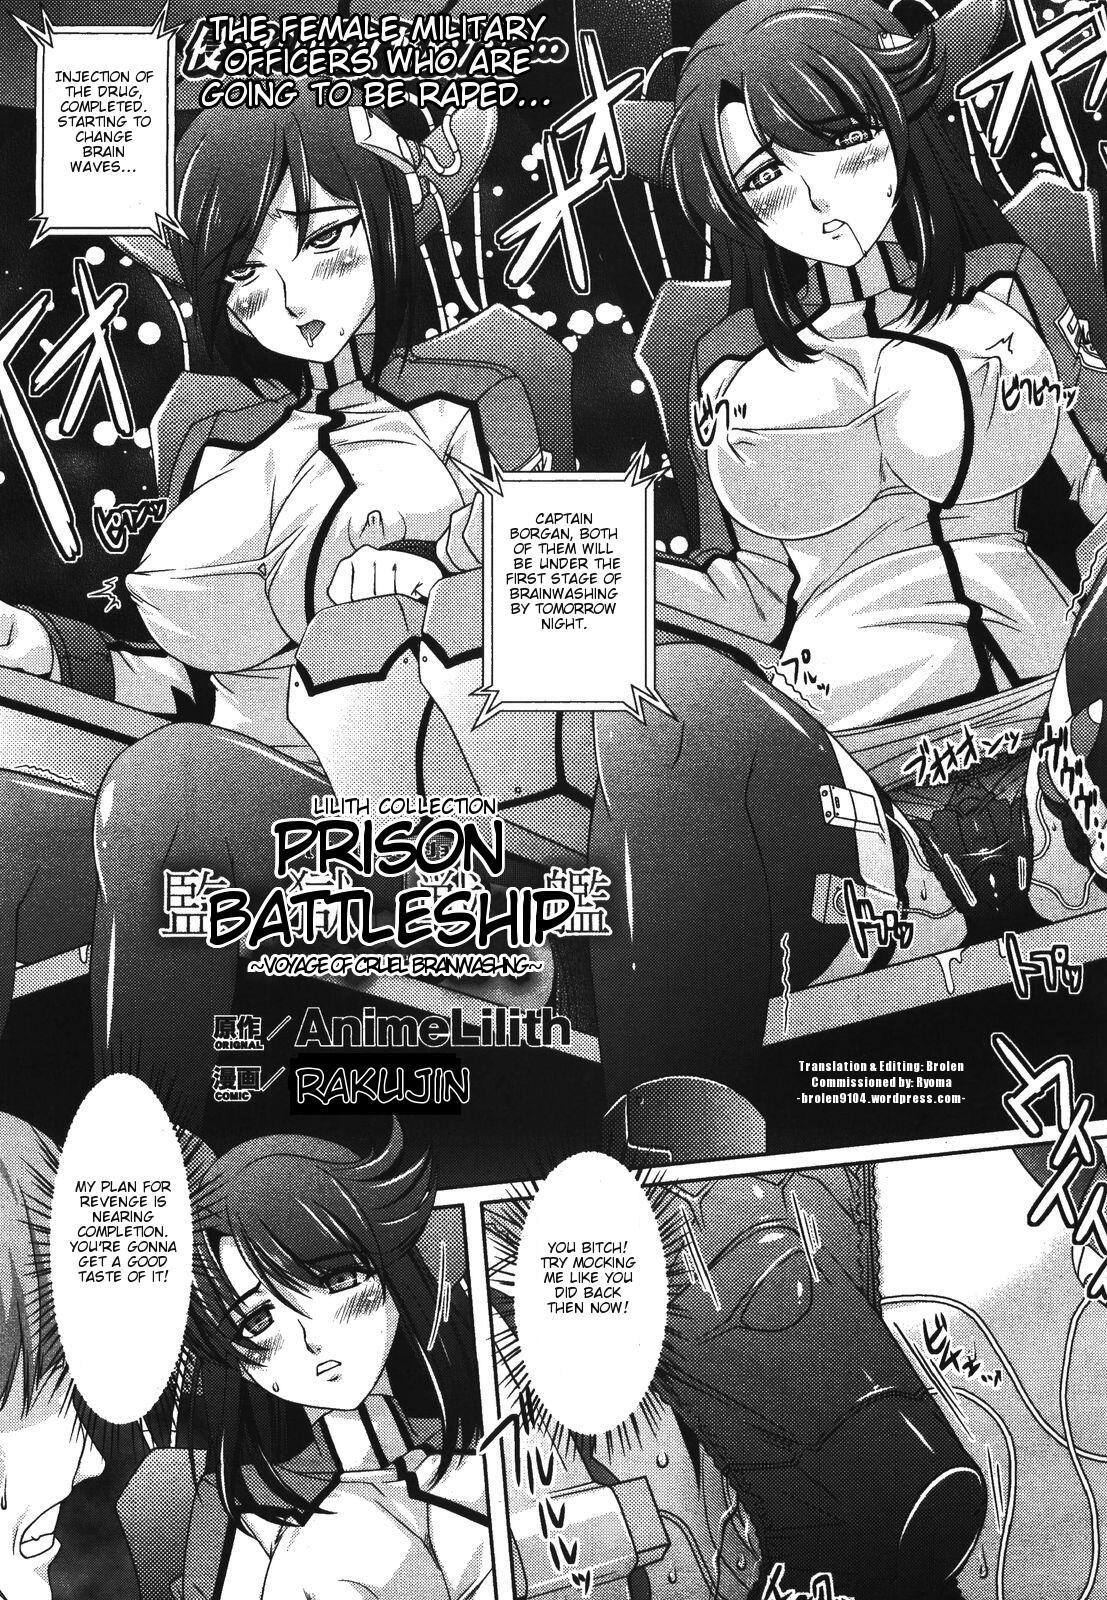 Prison Battleship kangoku senkan hentai manga